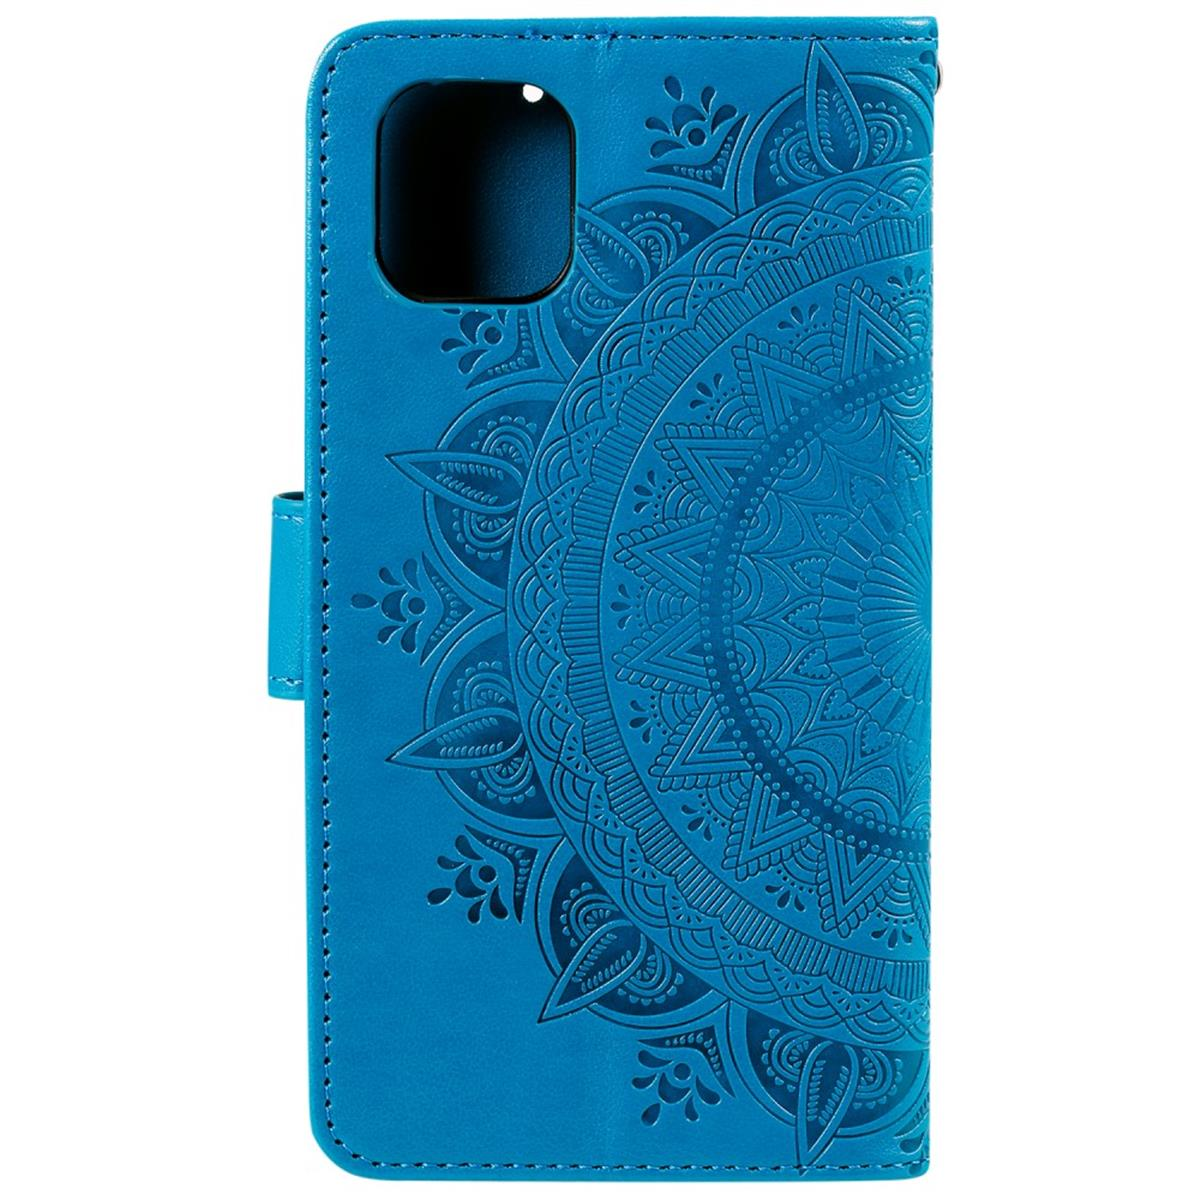 Apple, COVERKINGZ Blau Klapphülle mit Muster, Mandala Bookcover, iPhone 11,